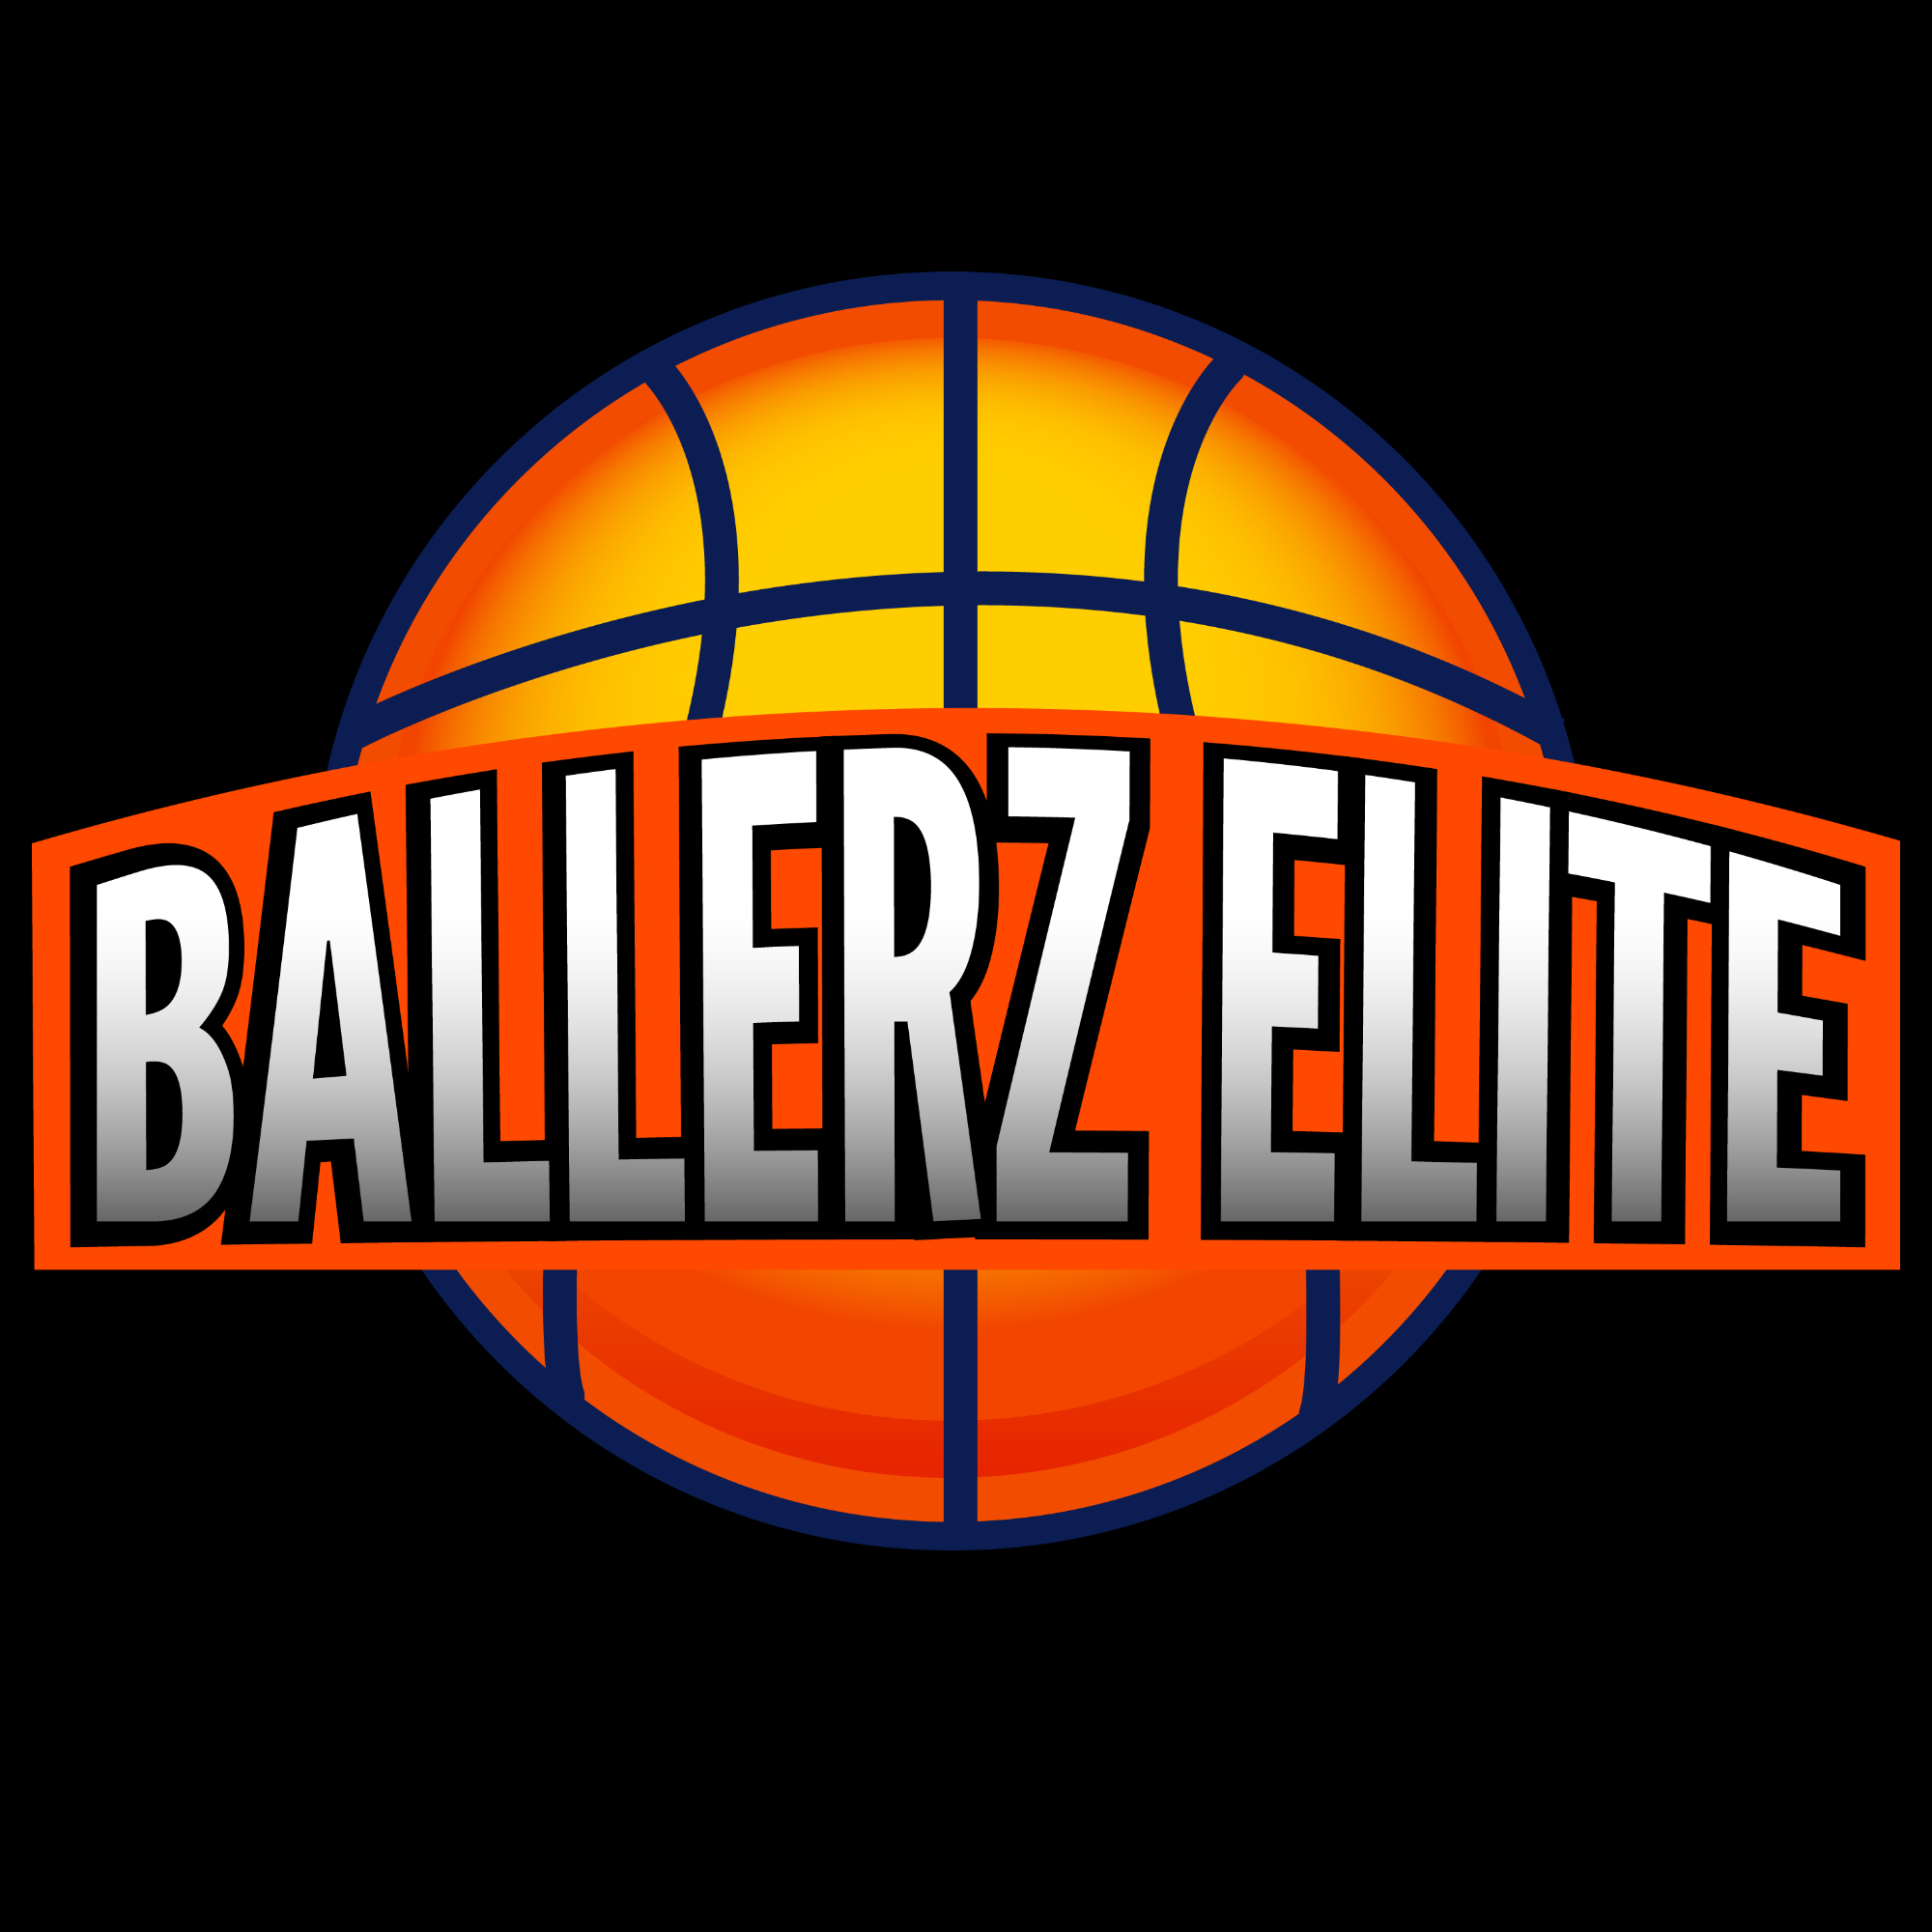 The official logo of Ballerz Elite